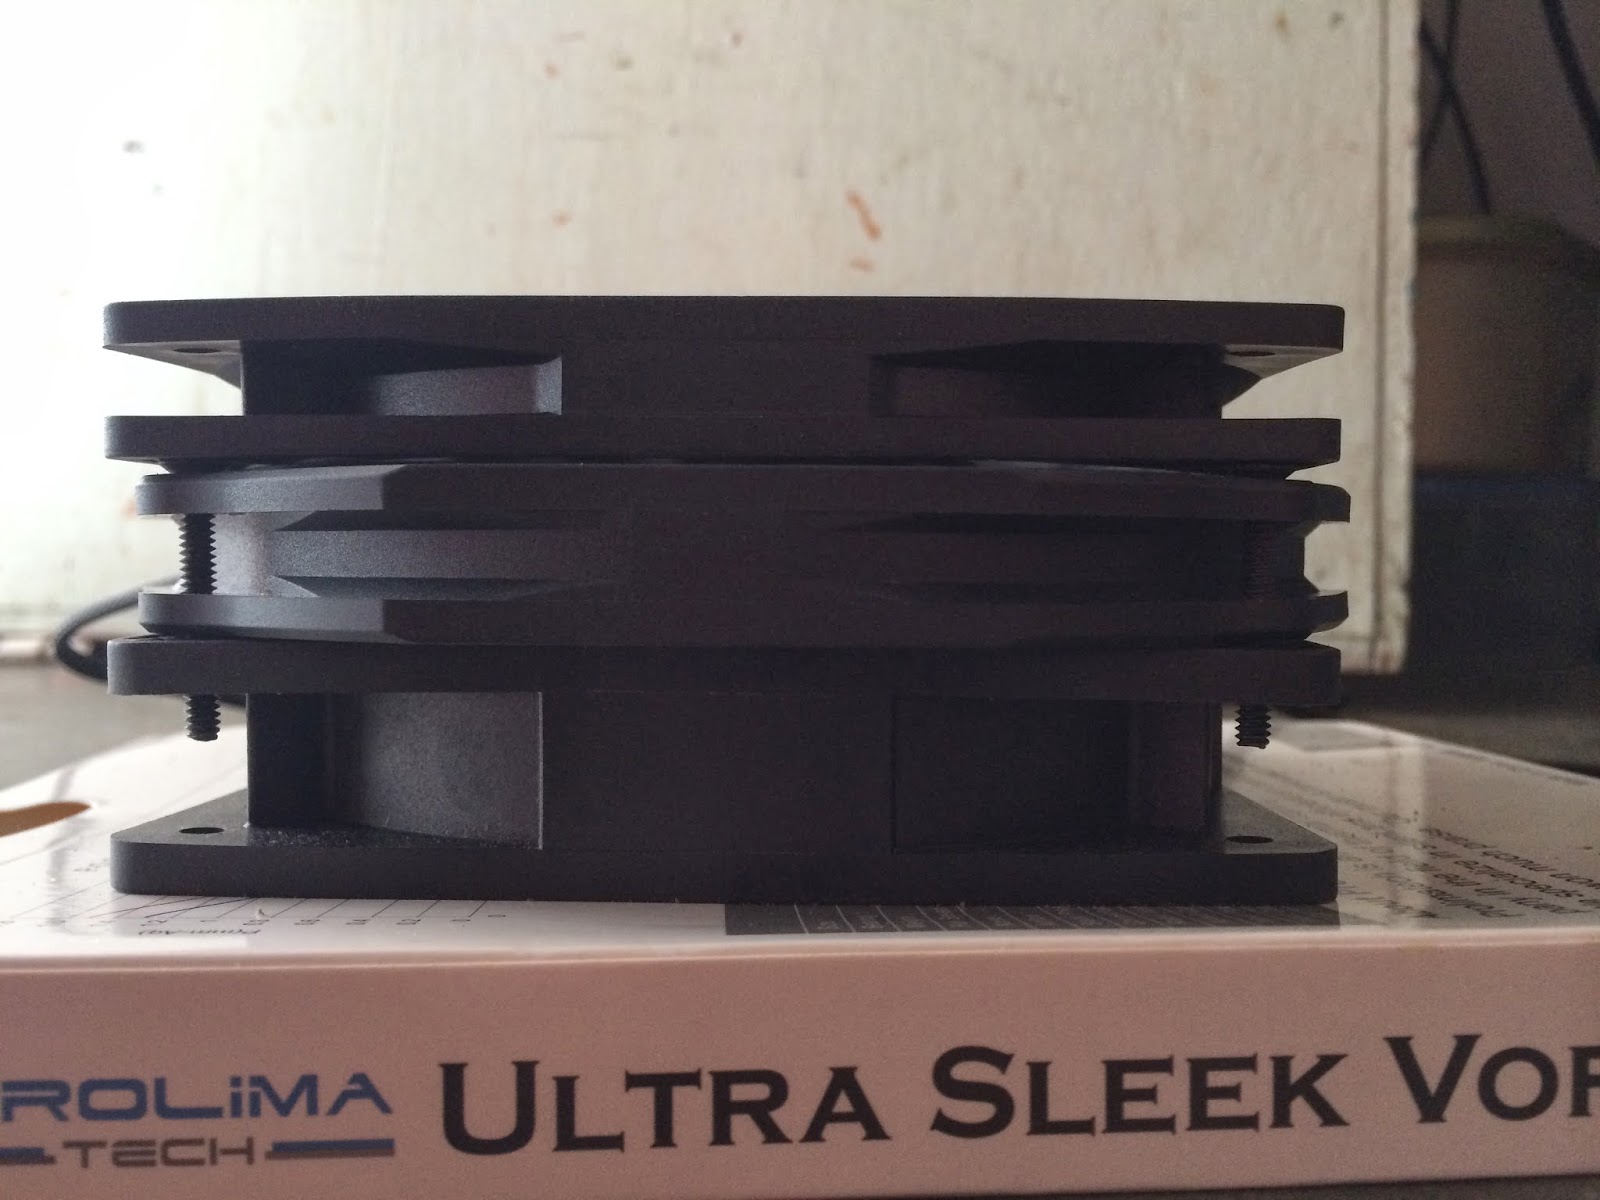 Prolimatech Ultra Sleek Vortex Performance Review 26